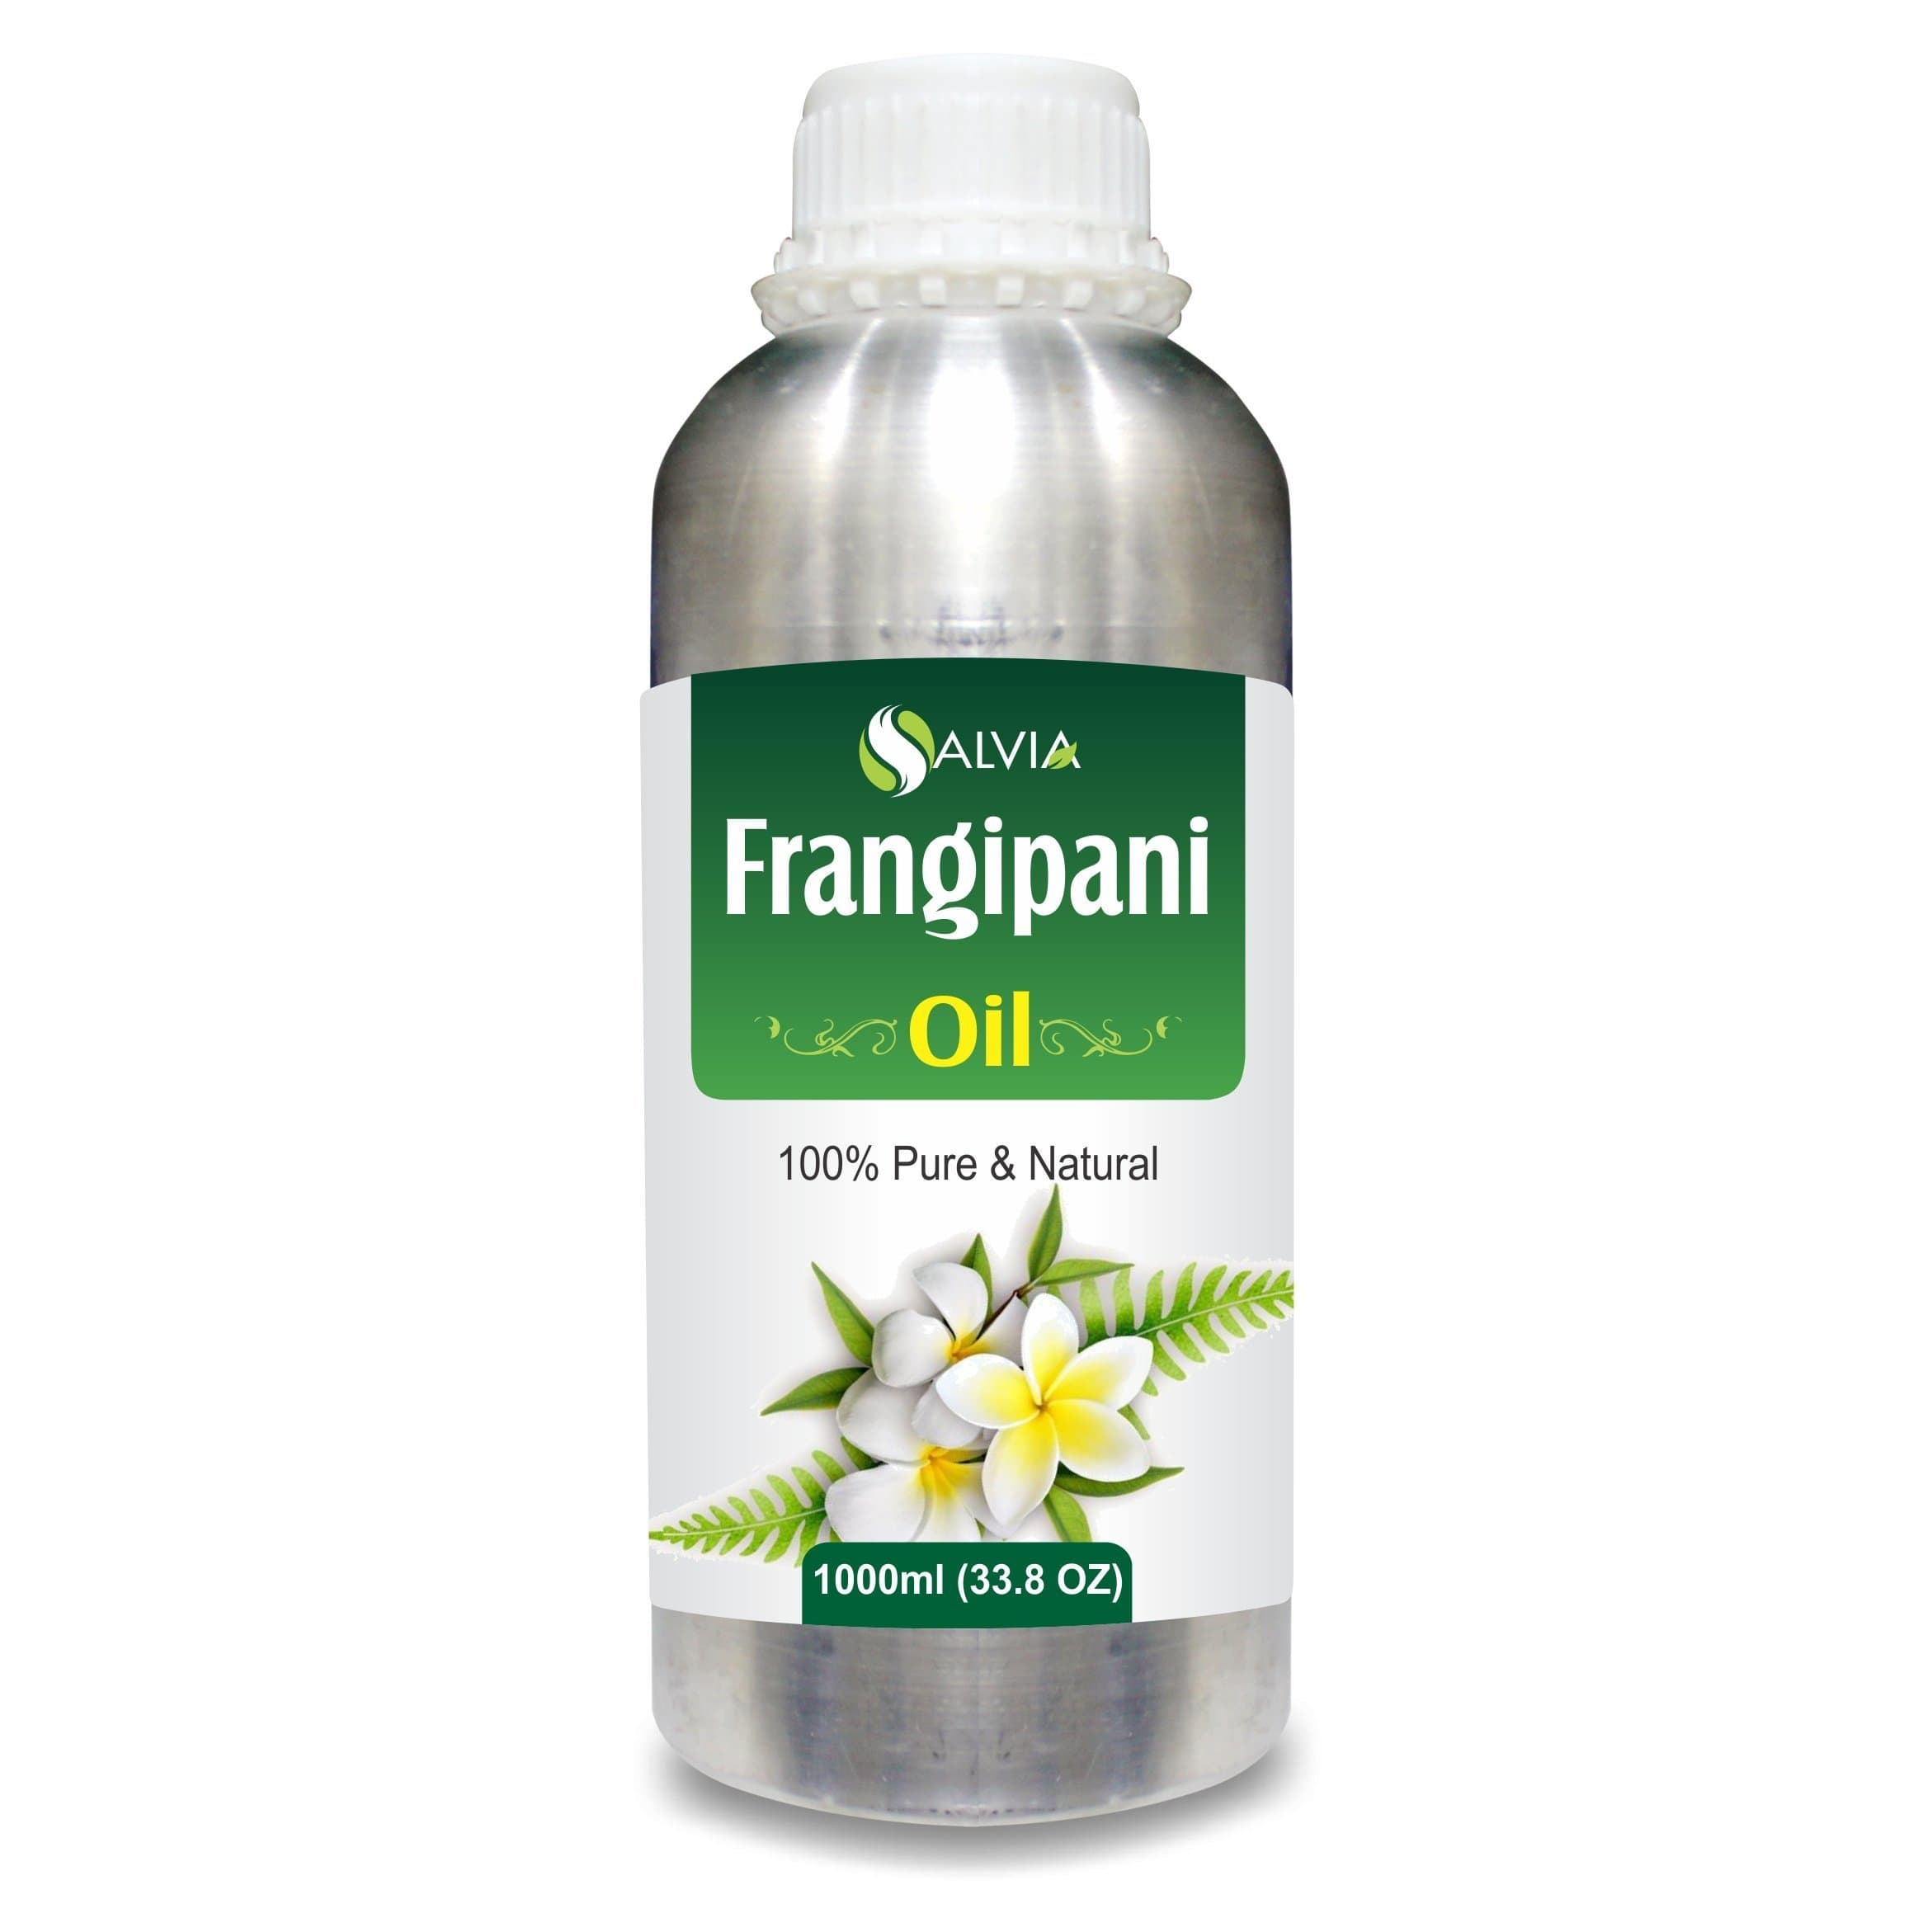 how to make frangipani oil